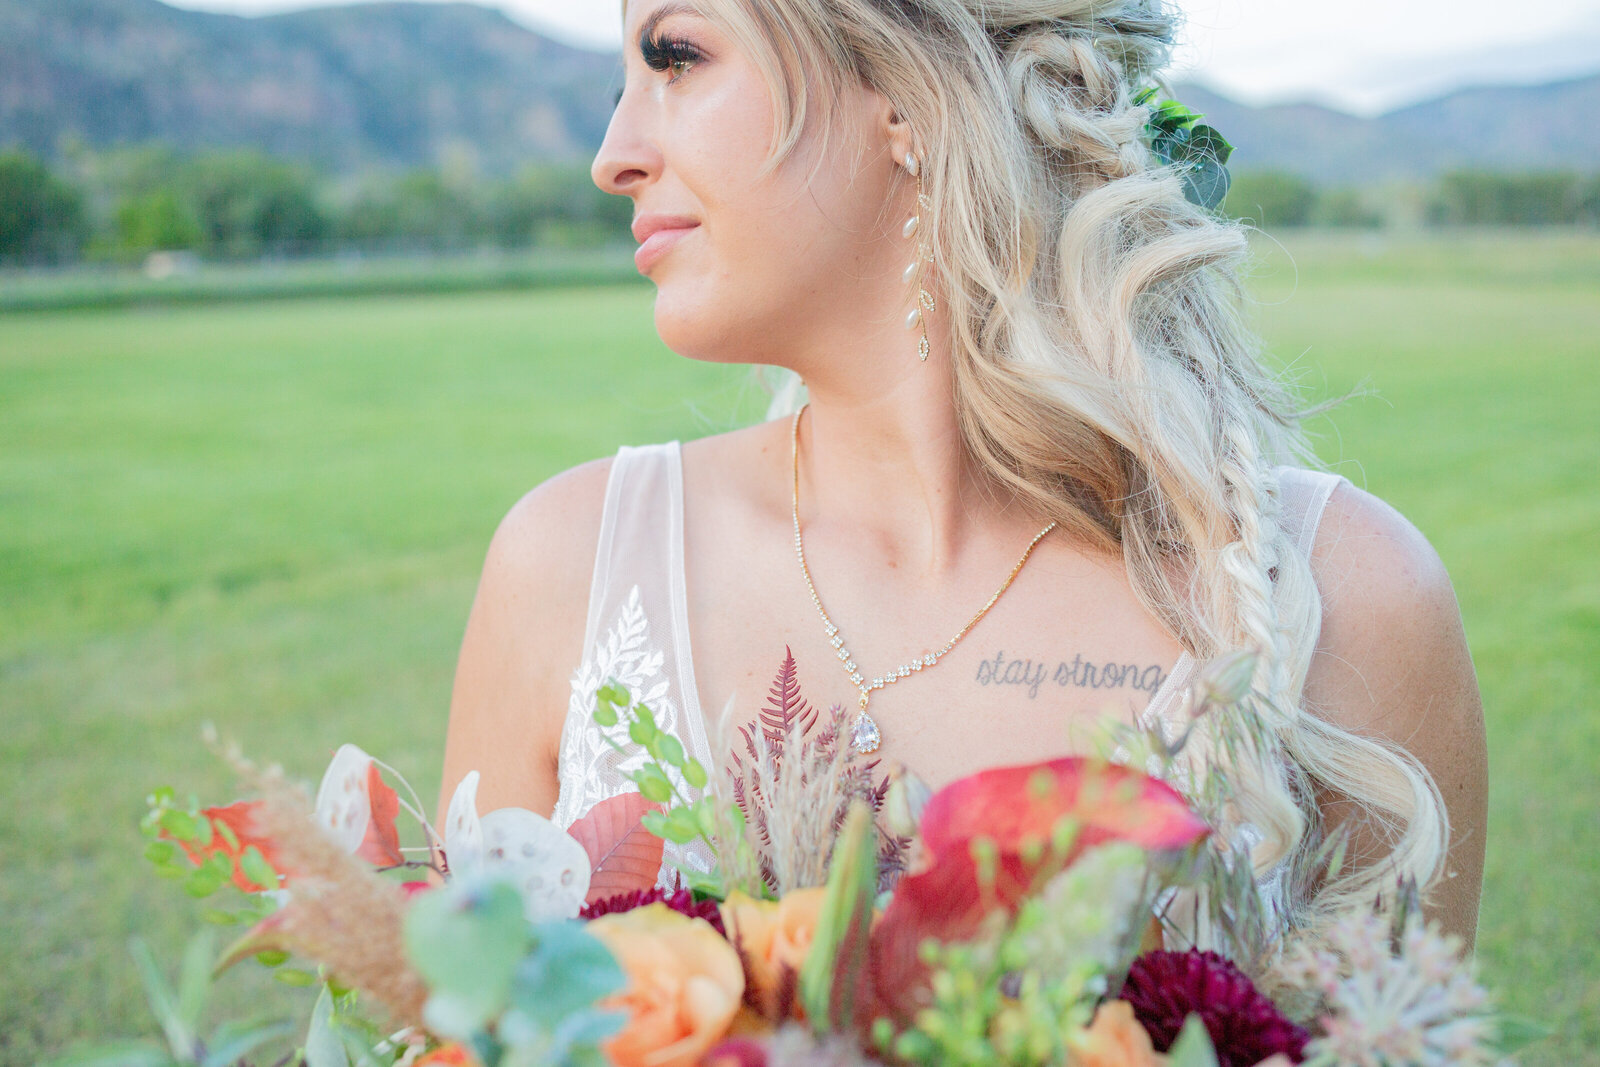 Seattle Wedding Photographers capture bride holding bouquet during outdoor wedding portraits